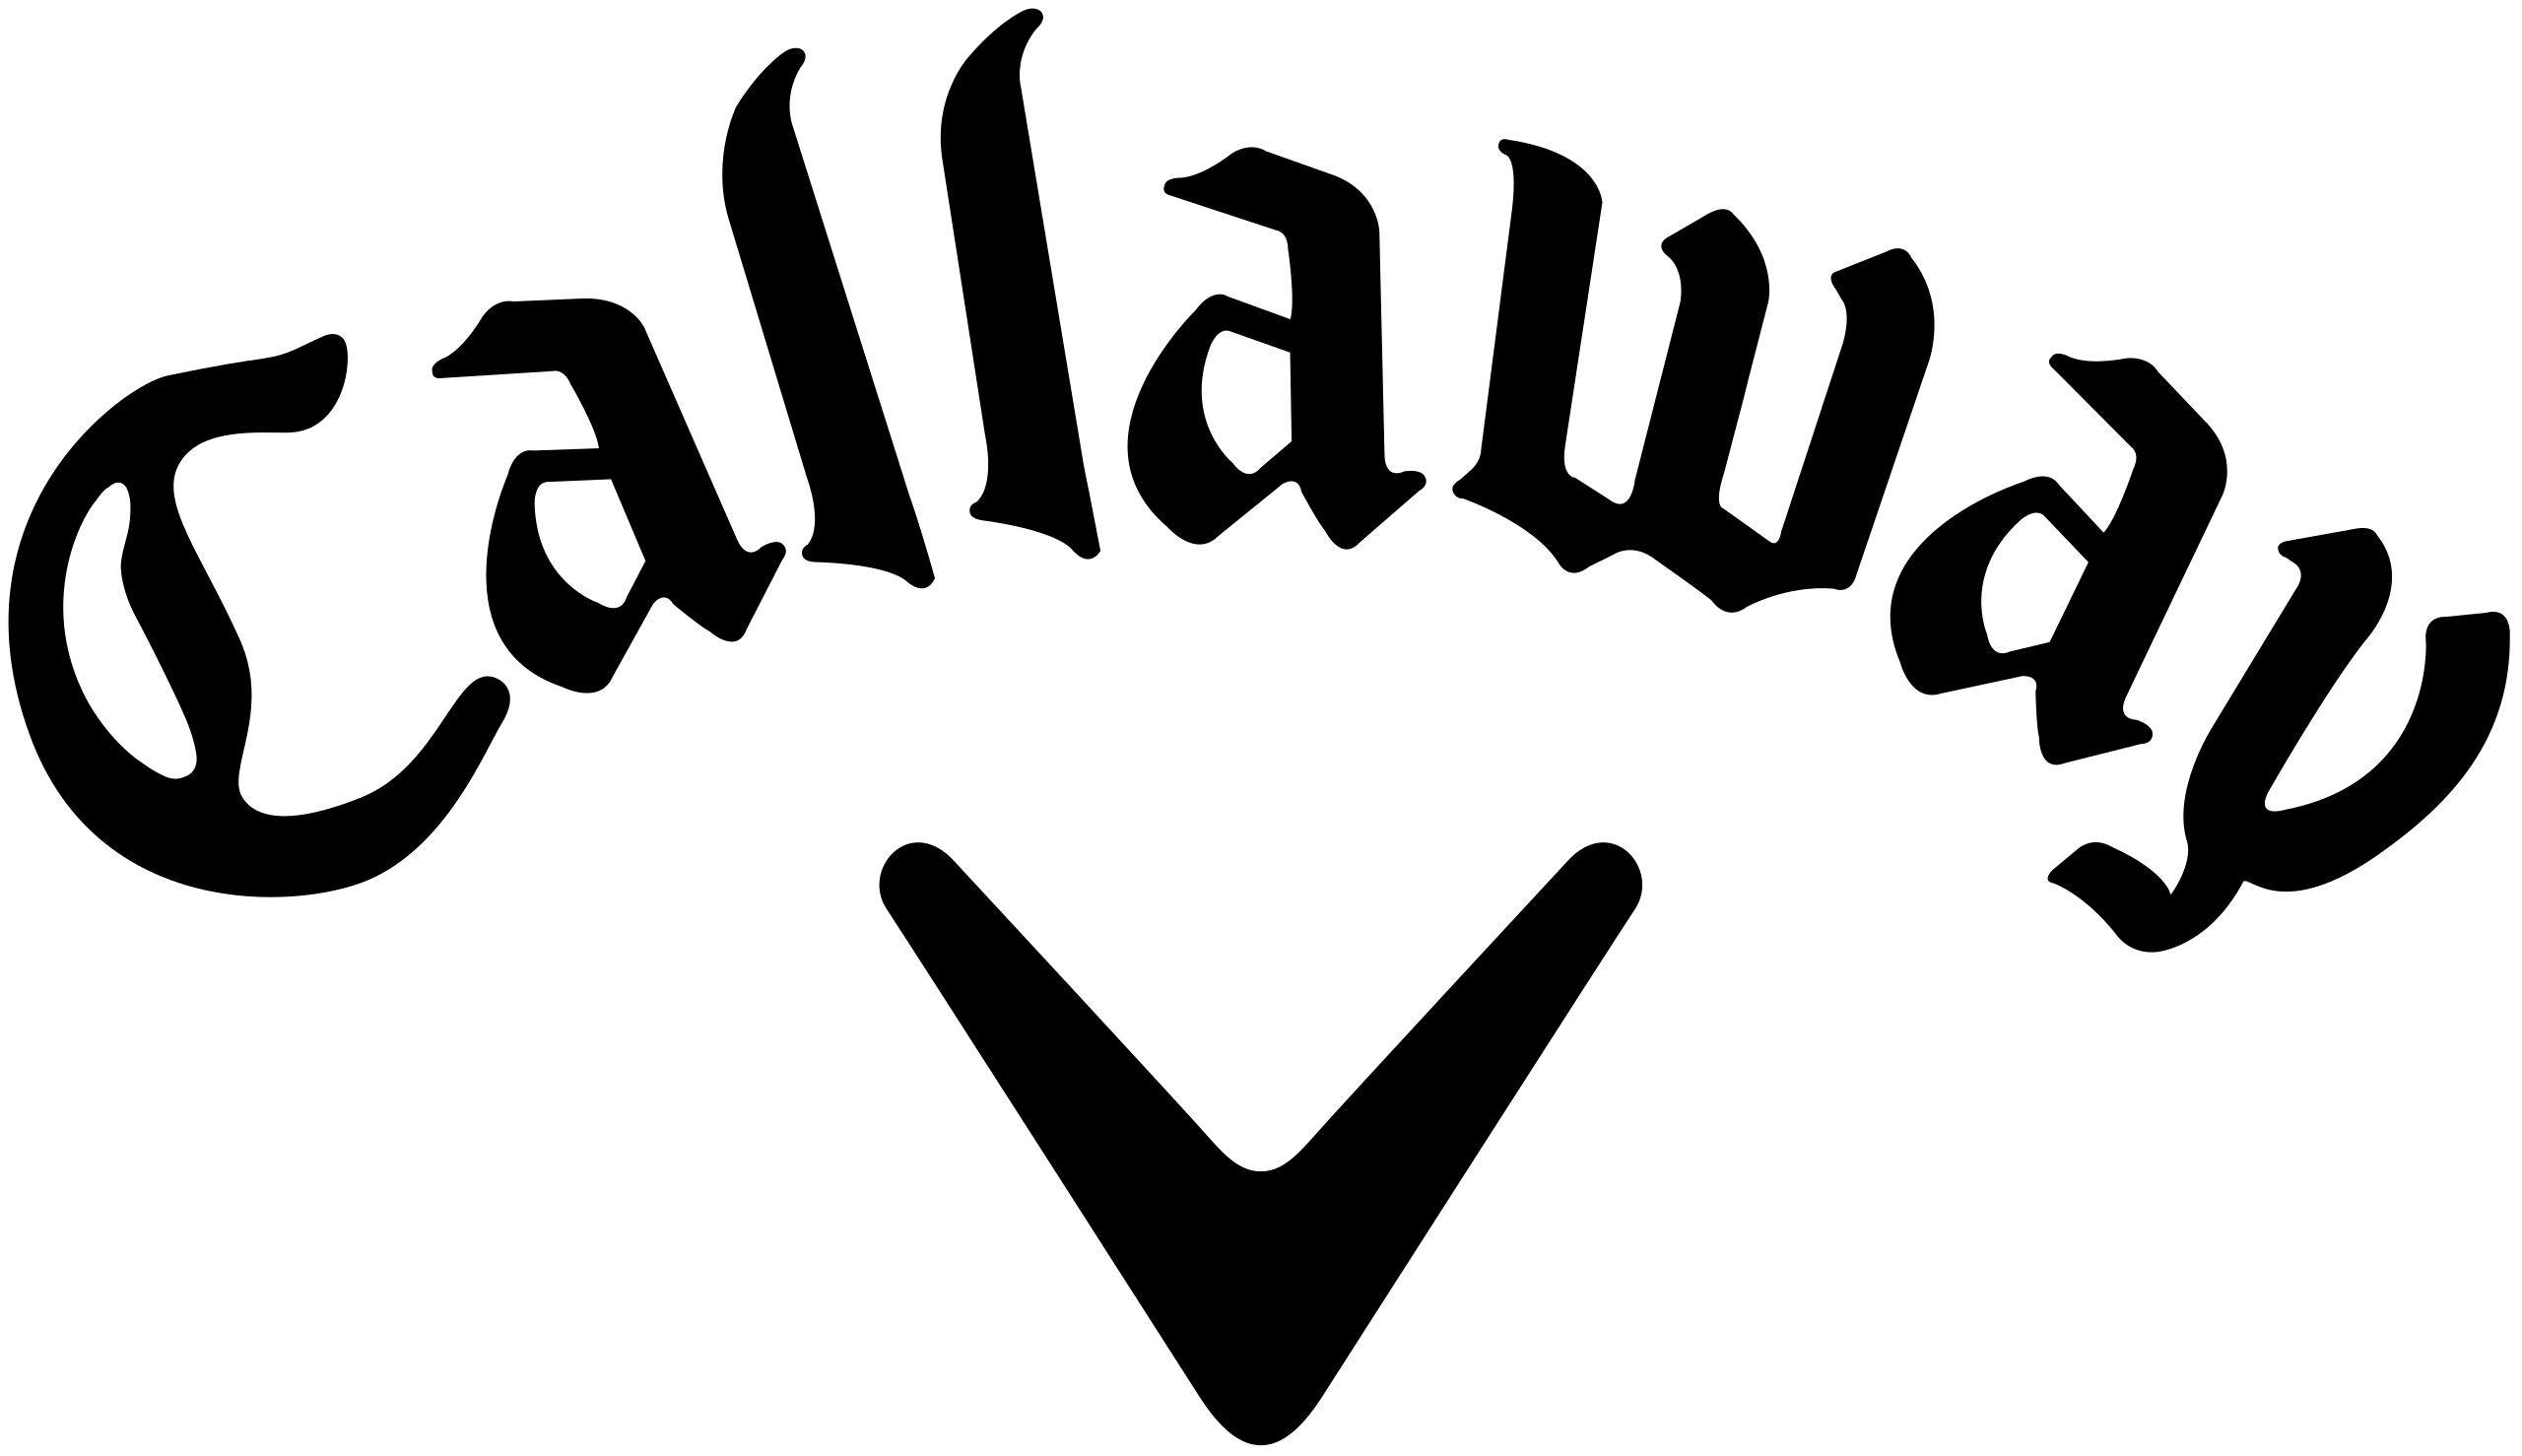 FileCallaway Golf Company logo.svg - Wikipedia